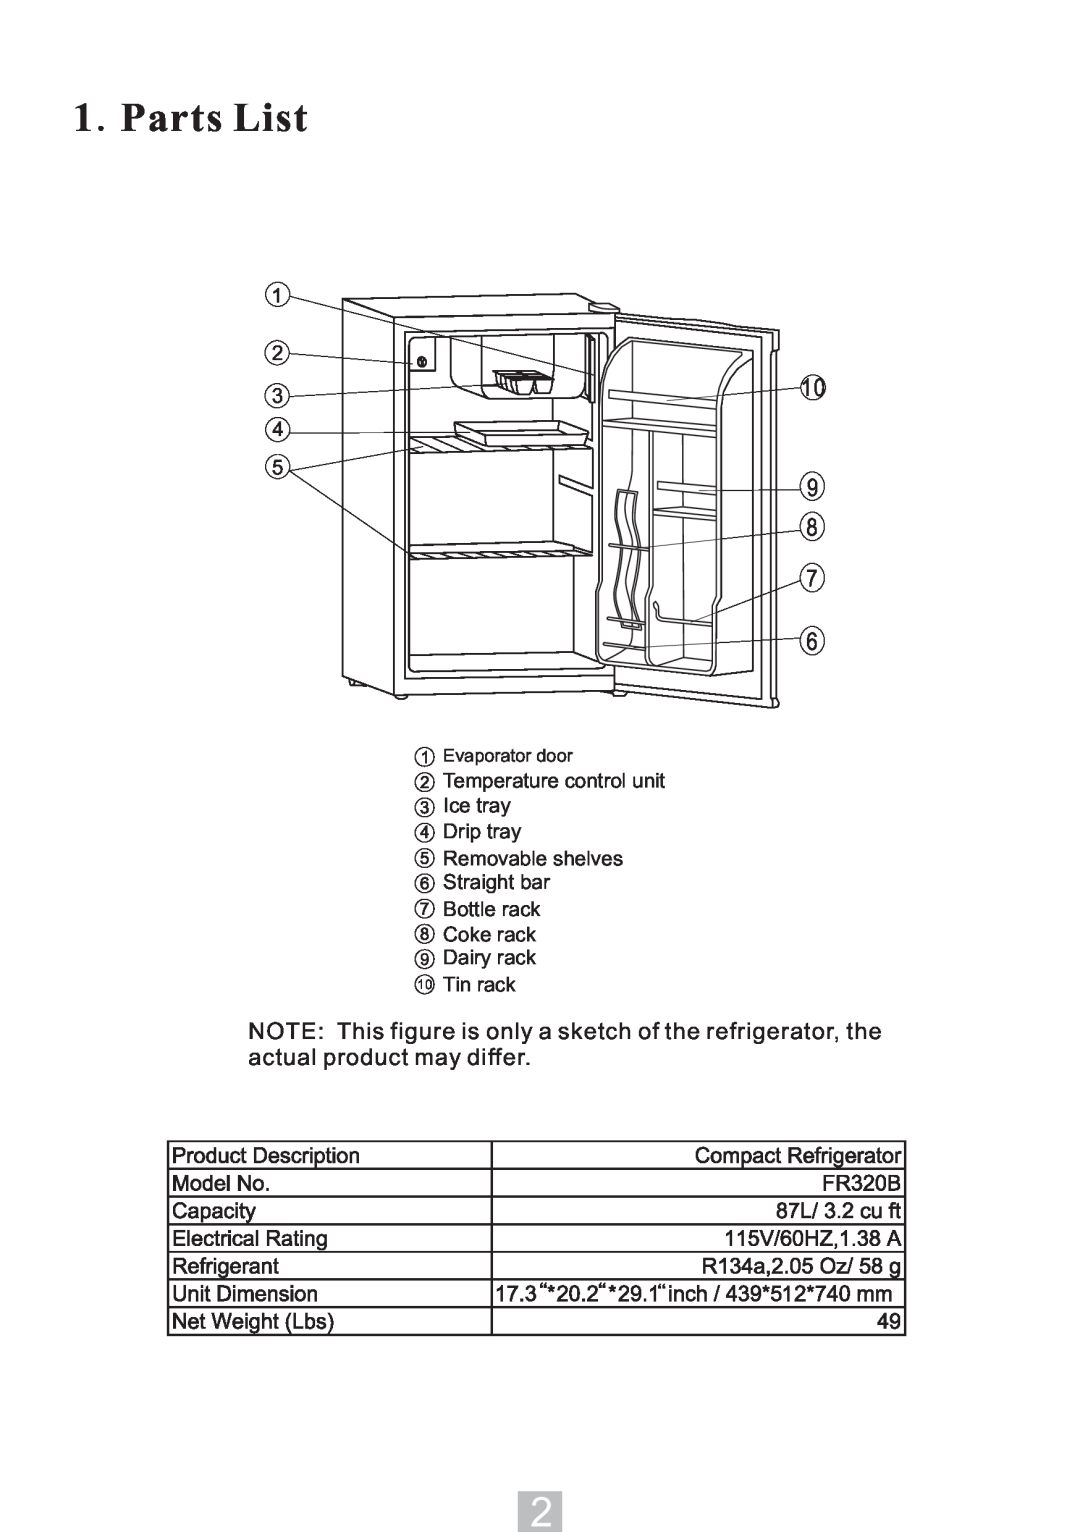 Igloo FR320B Parts List, 10 9 7 6, 1 2 3, Temperature control unit Ice tray Drip tray, Coke rack 9Dairy rack 10Tin rack 